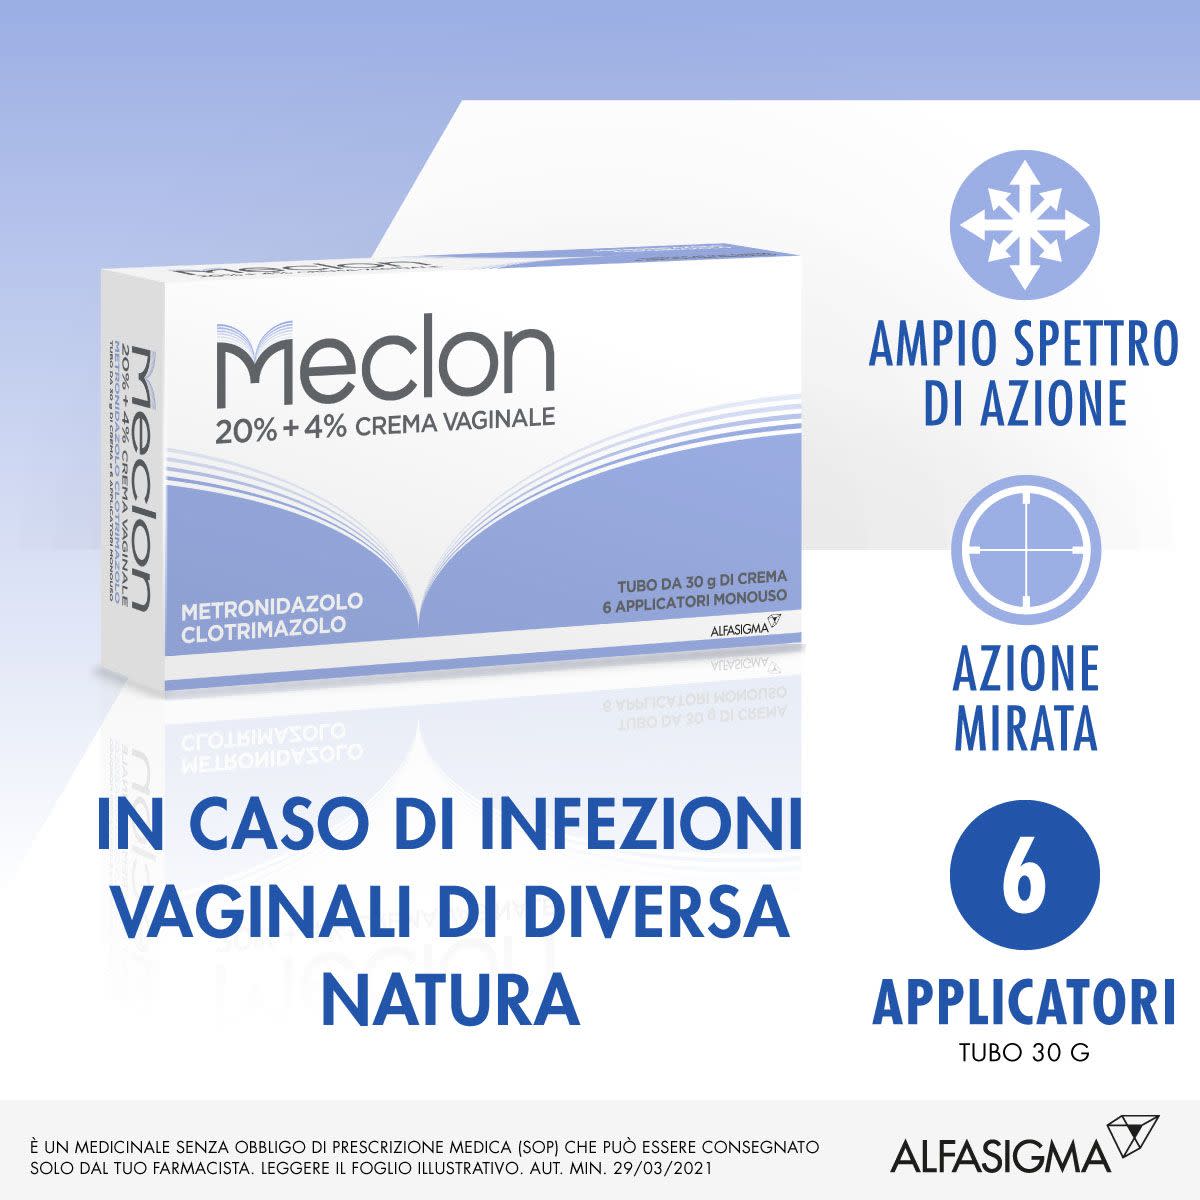 023703046 - Meclon Crema Vaginale 20% + 4% 30g + 6 applicatori - 7866921_3.jpg